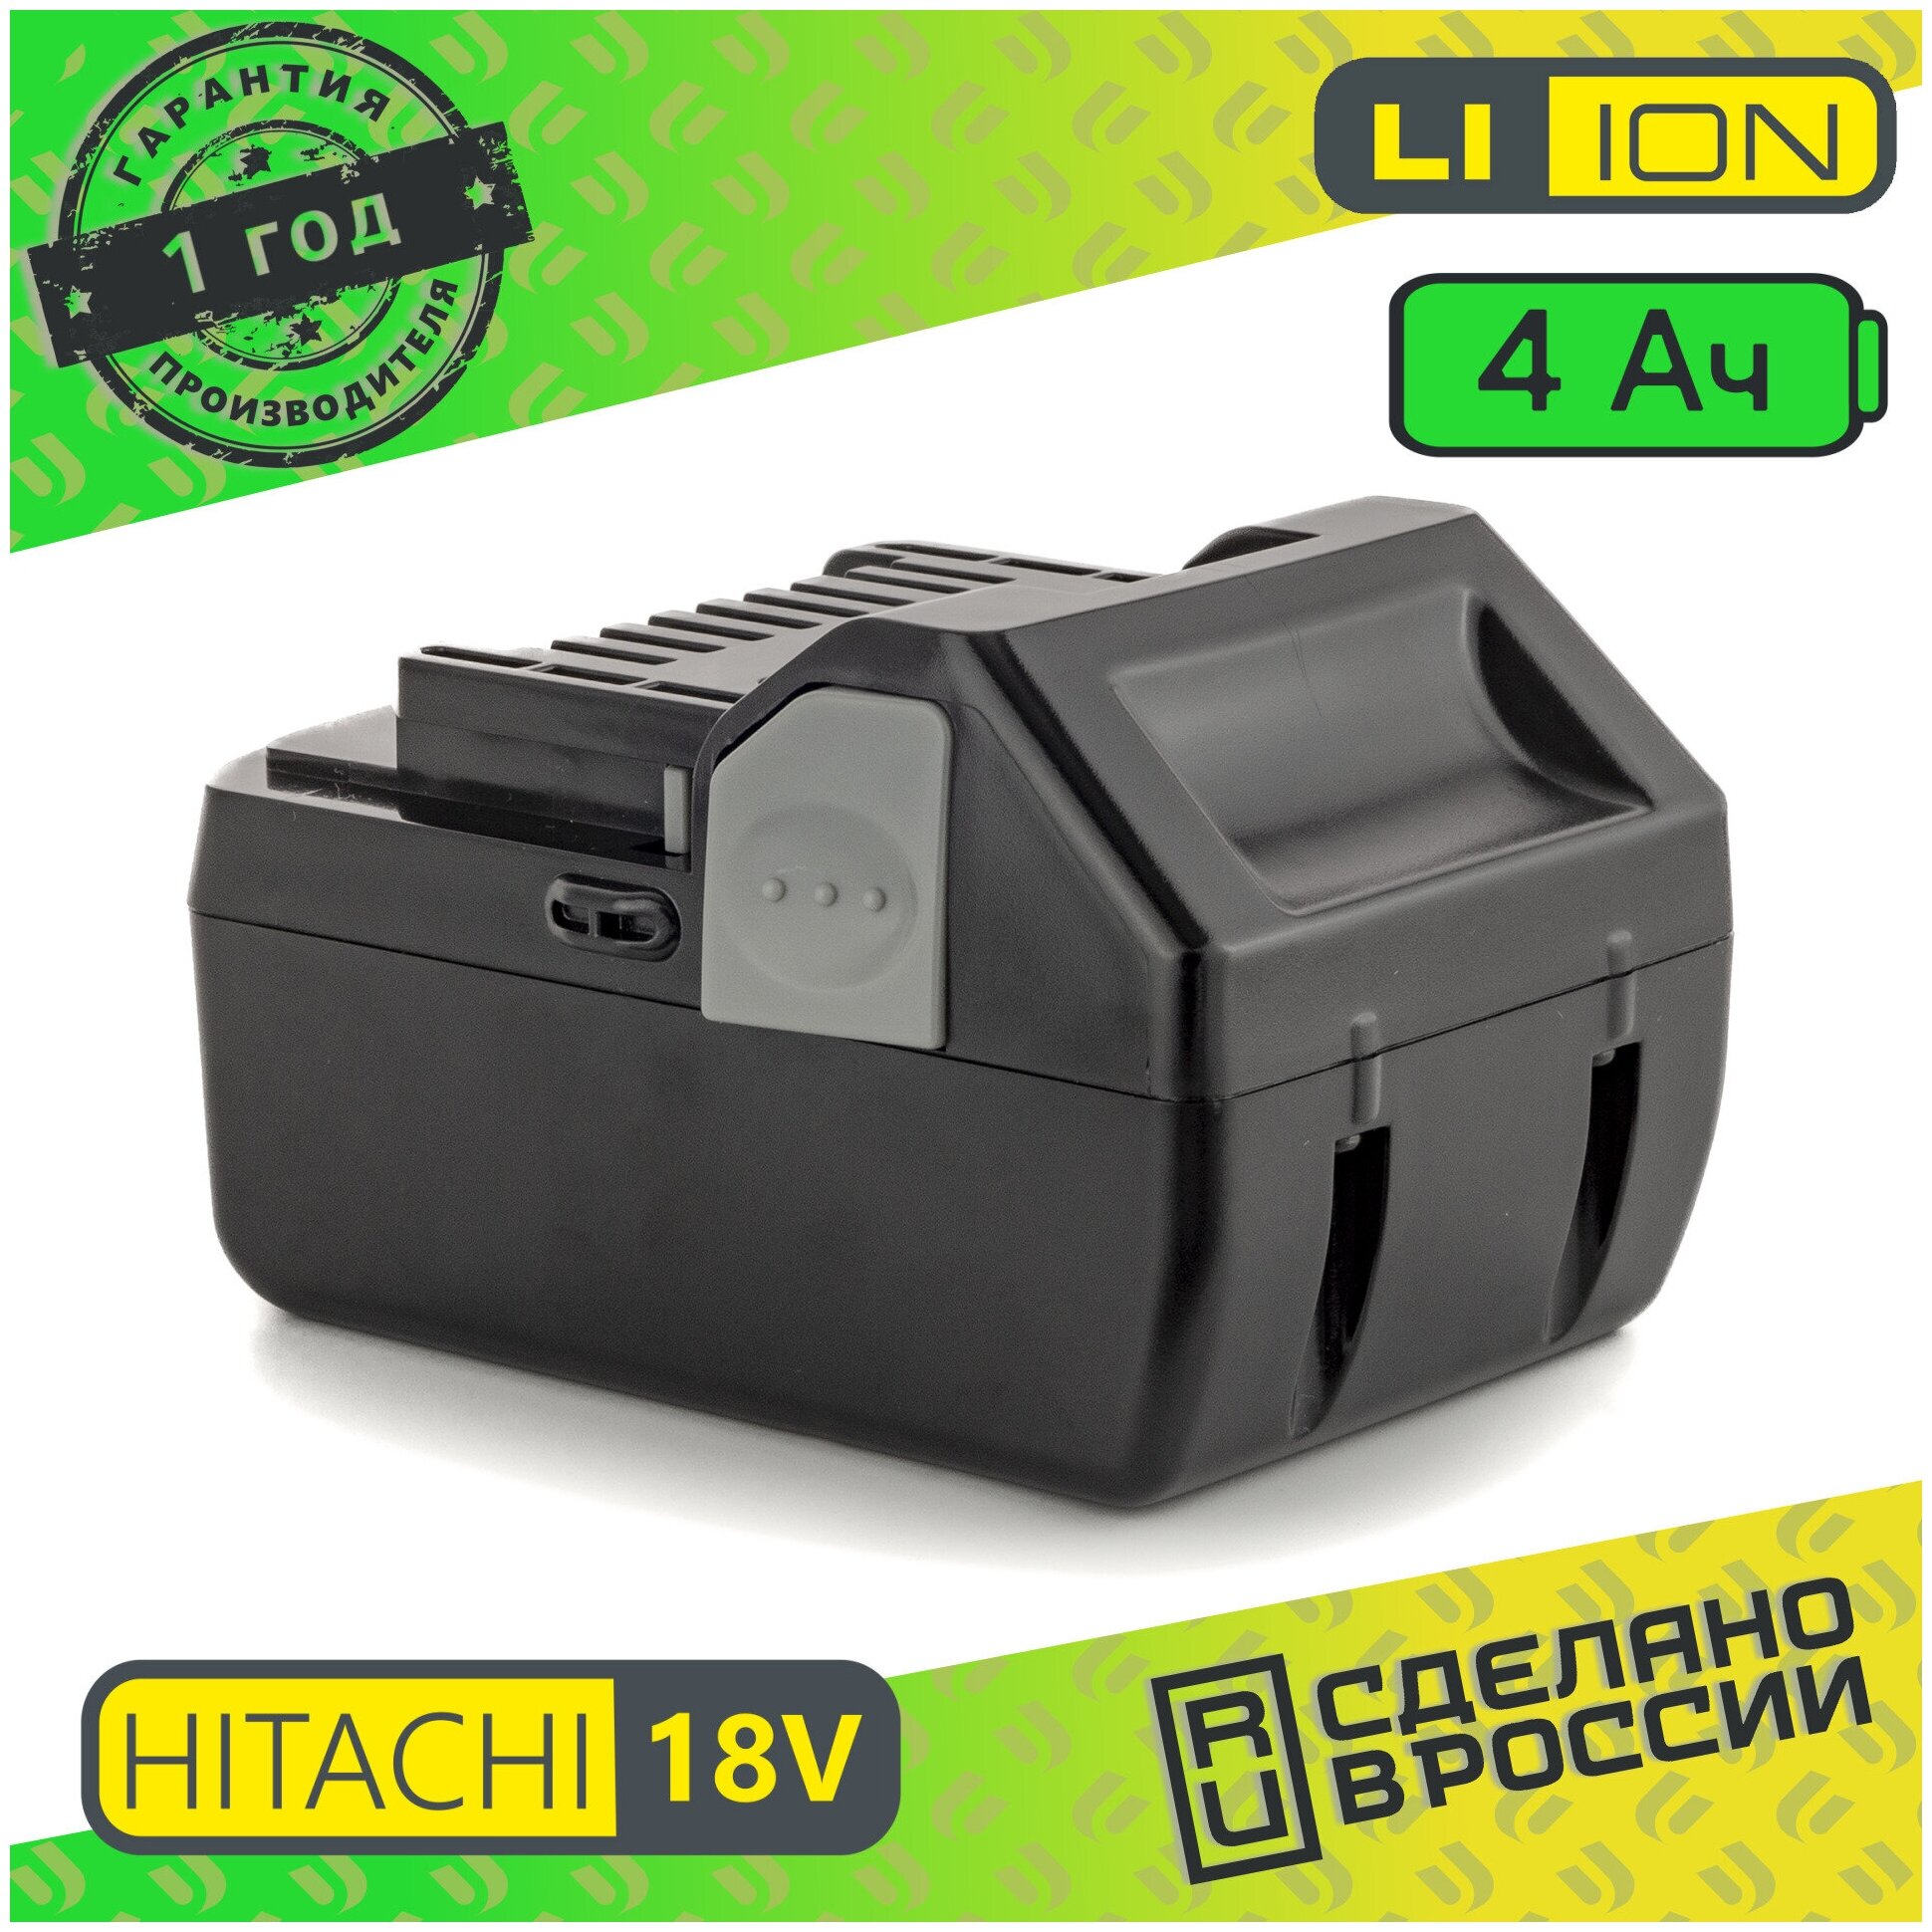 Аккумулятор для шуруповерта Hitachi 18v BSL1840 4.0 Ah